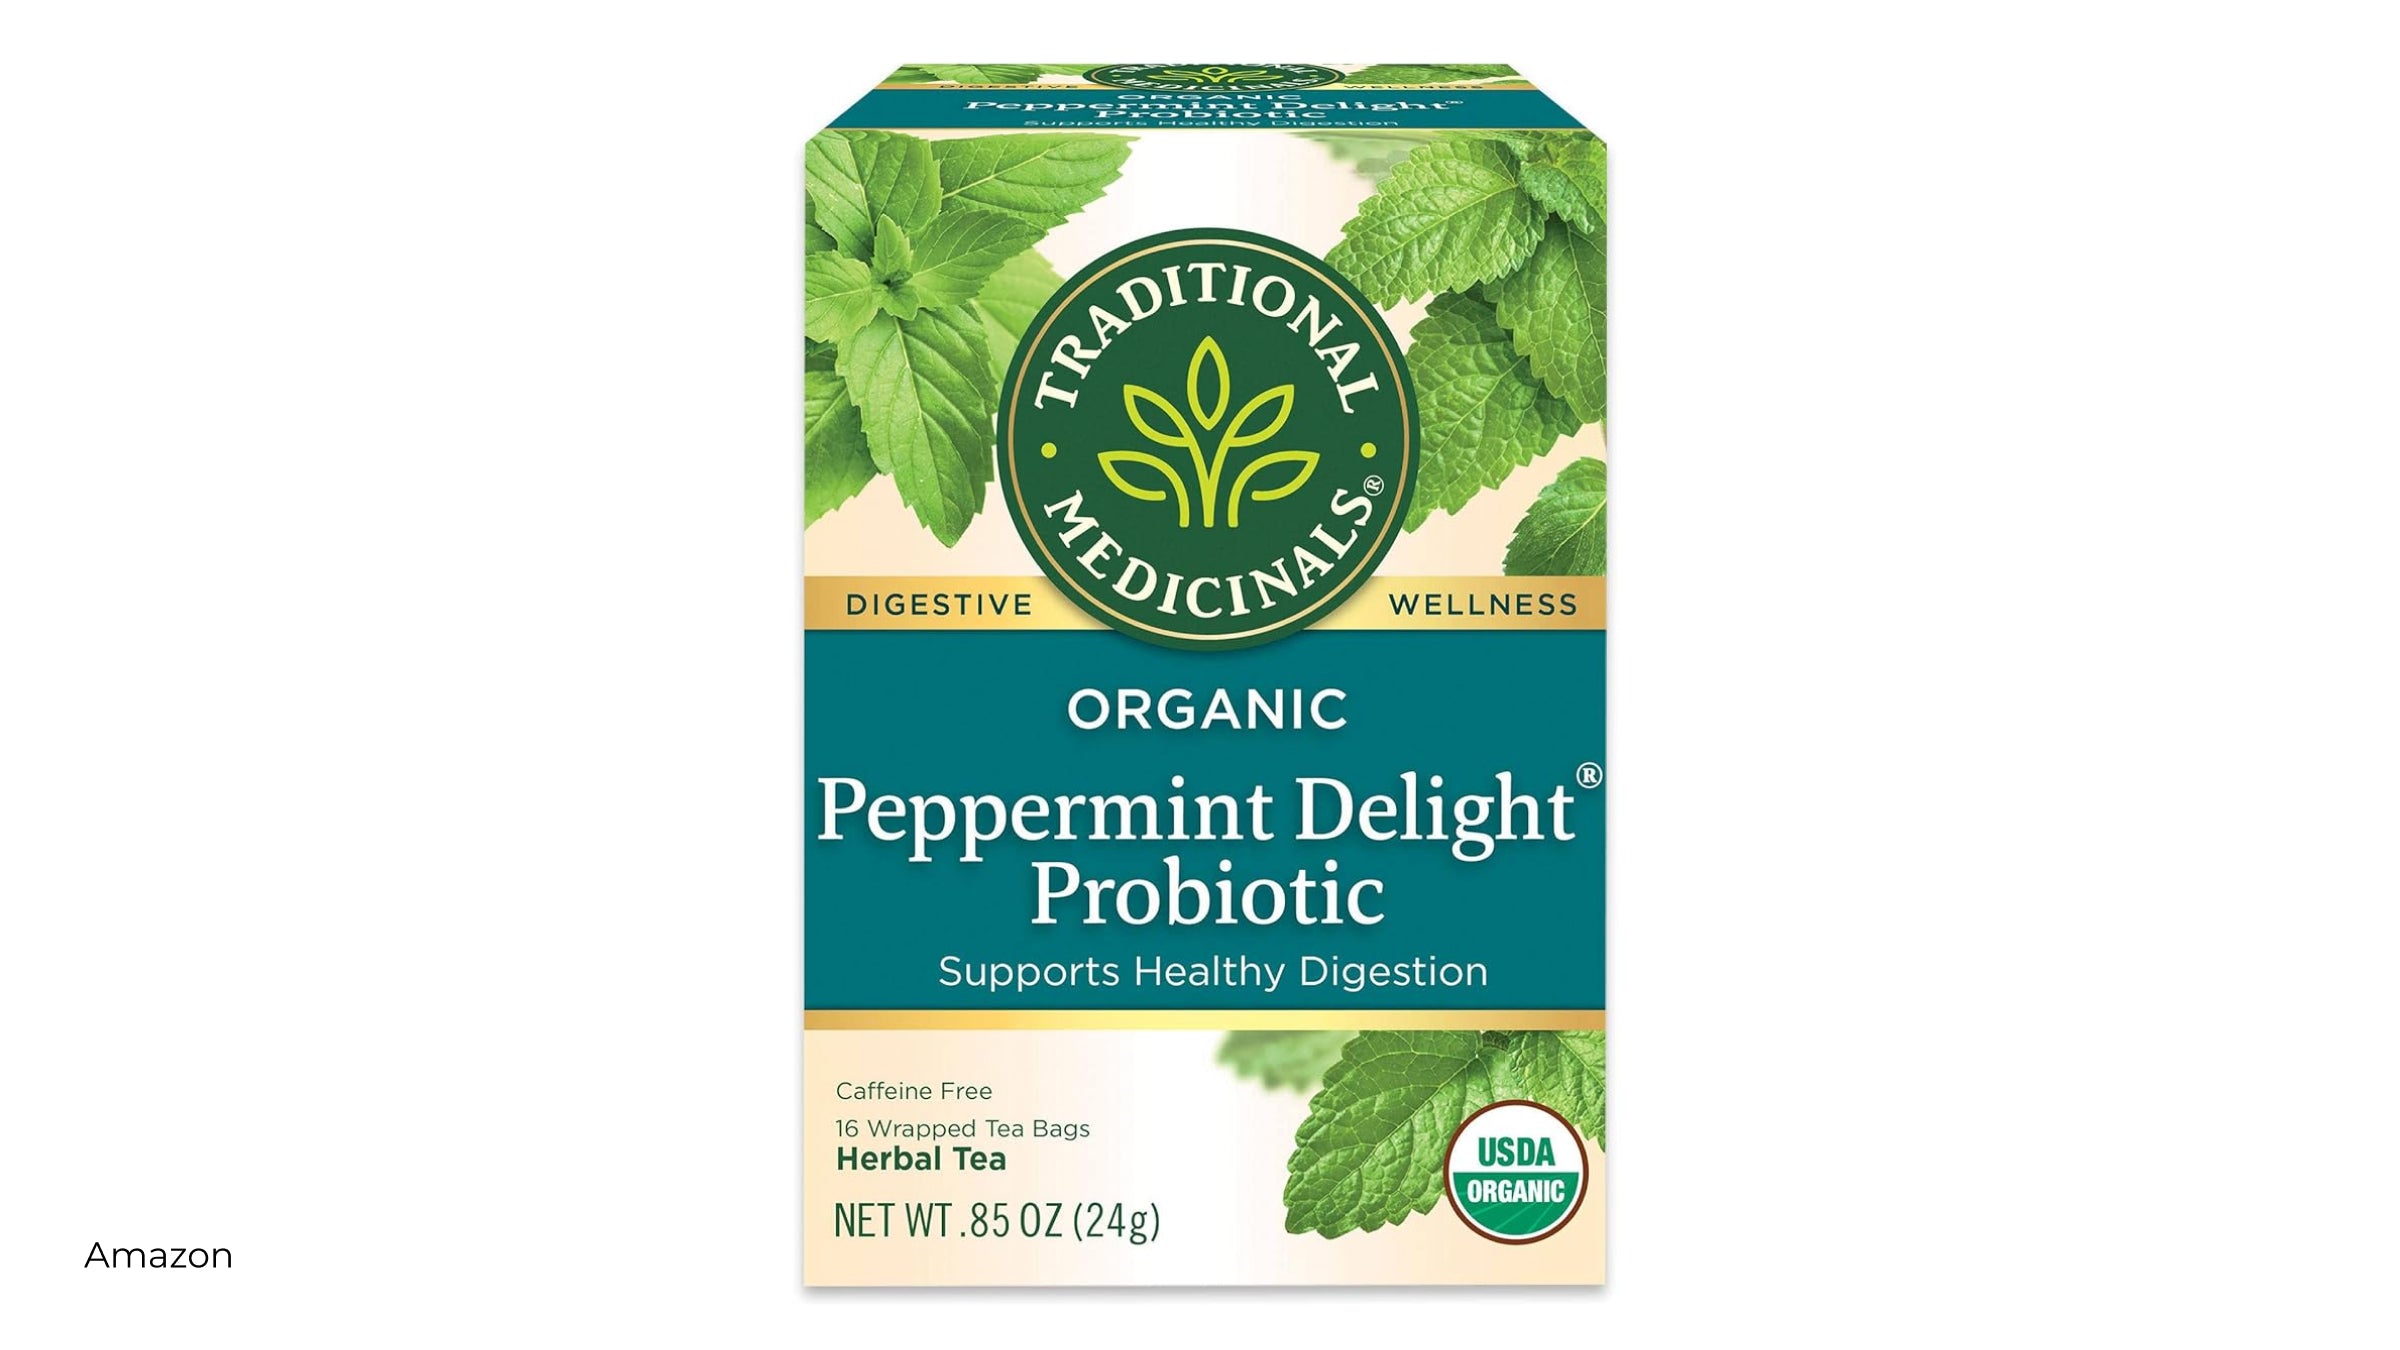 Organic peppermint tea from Amazon